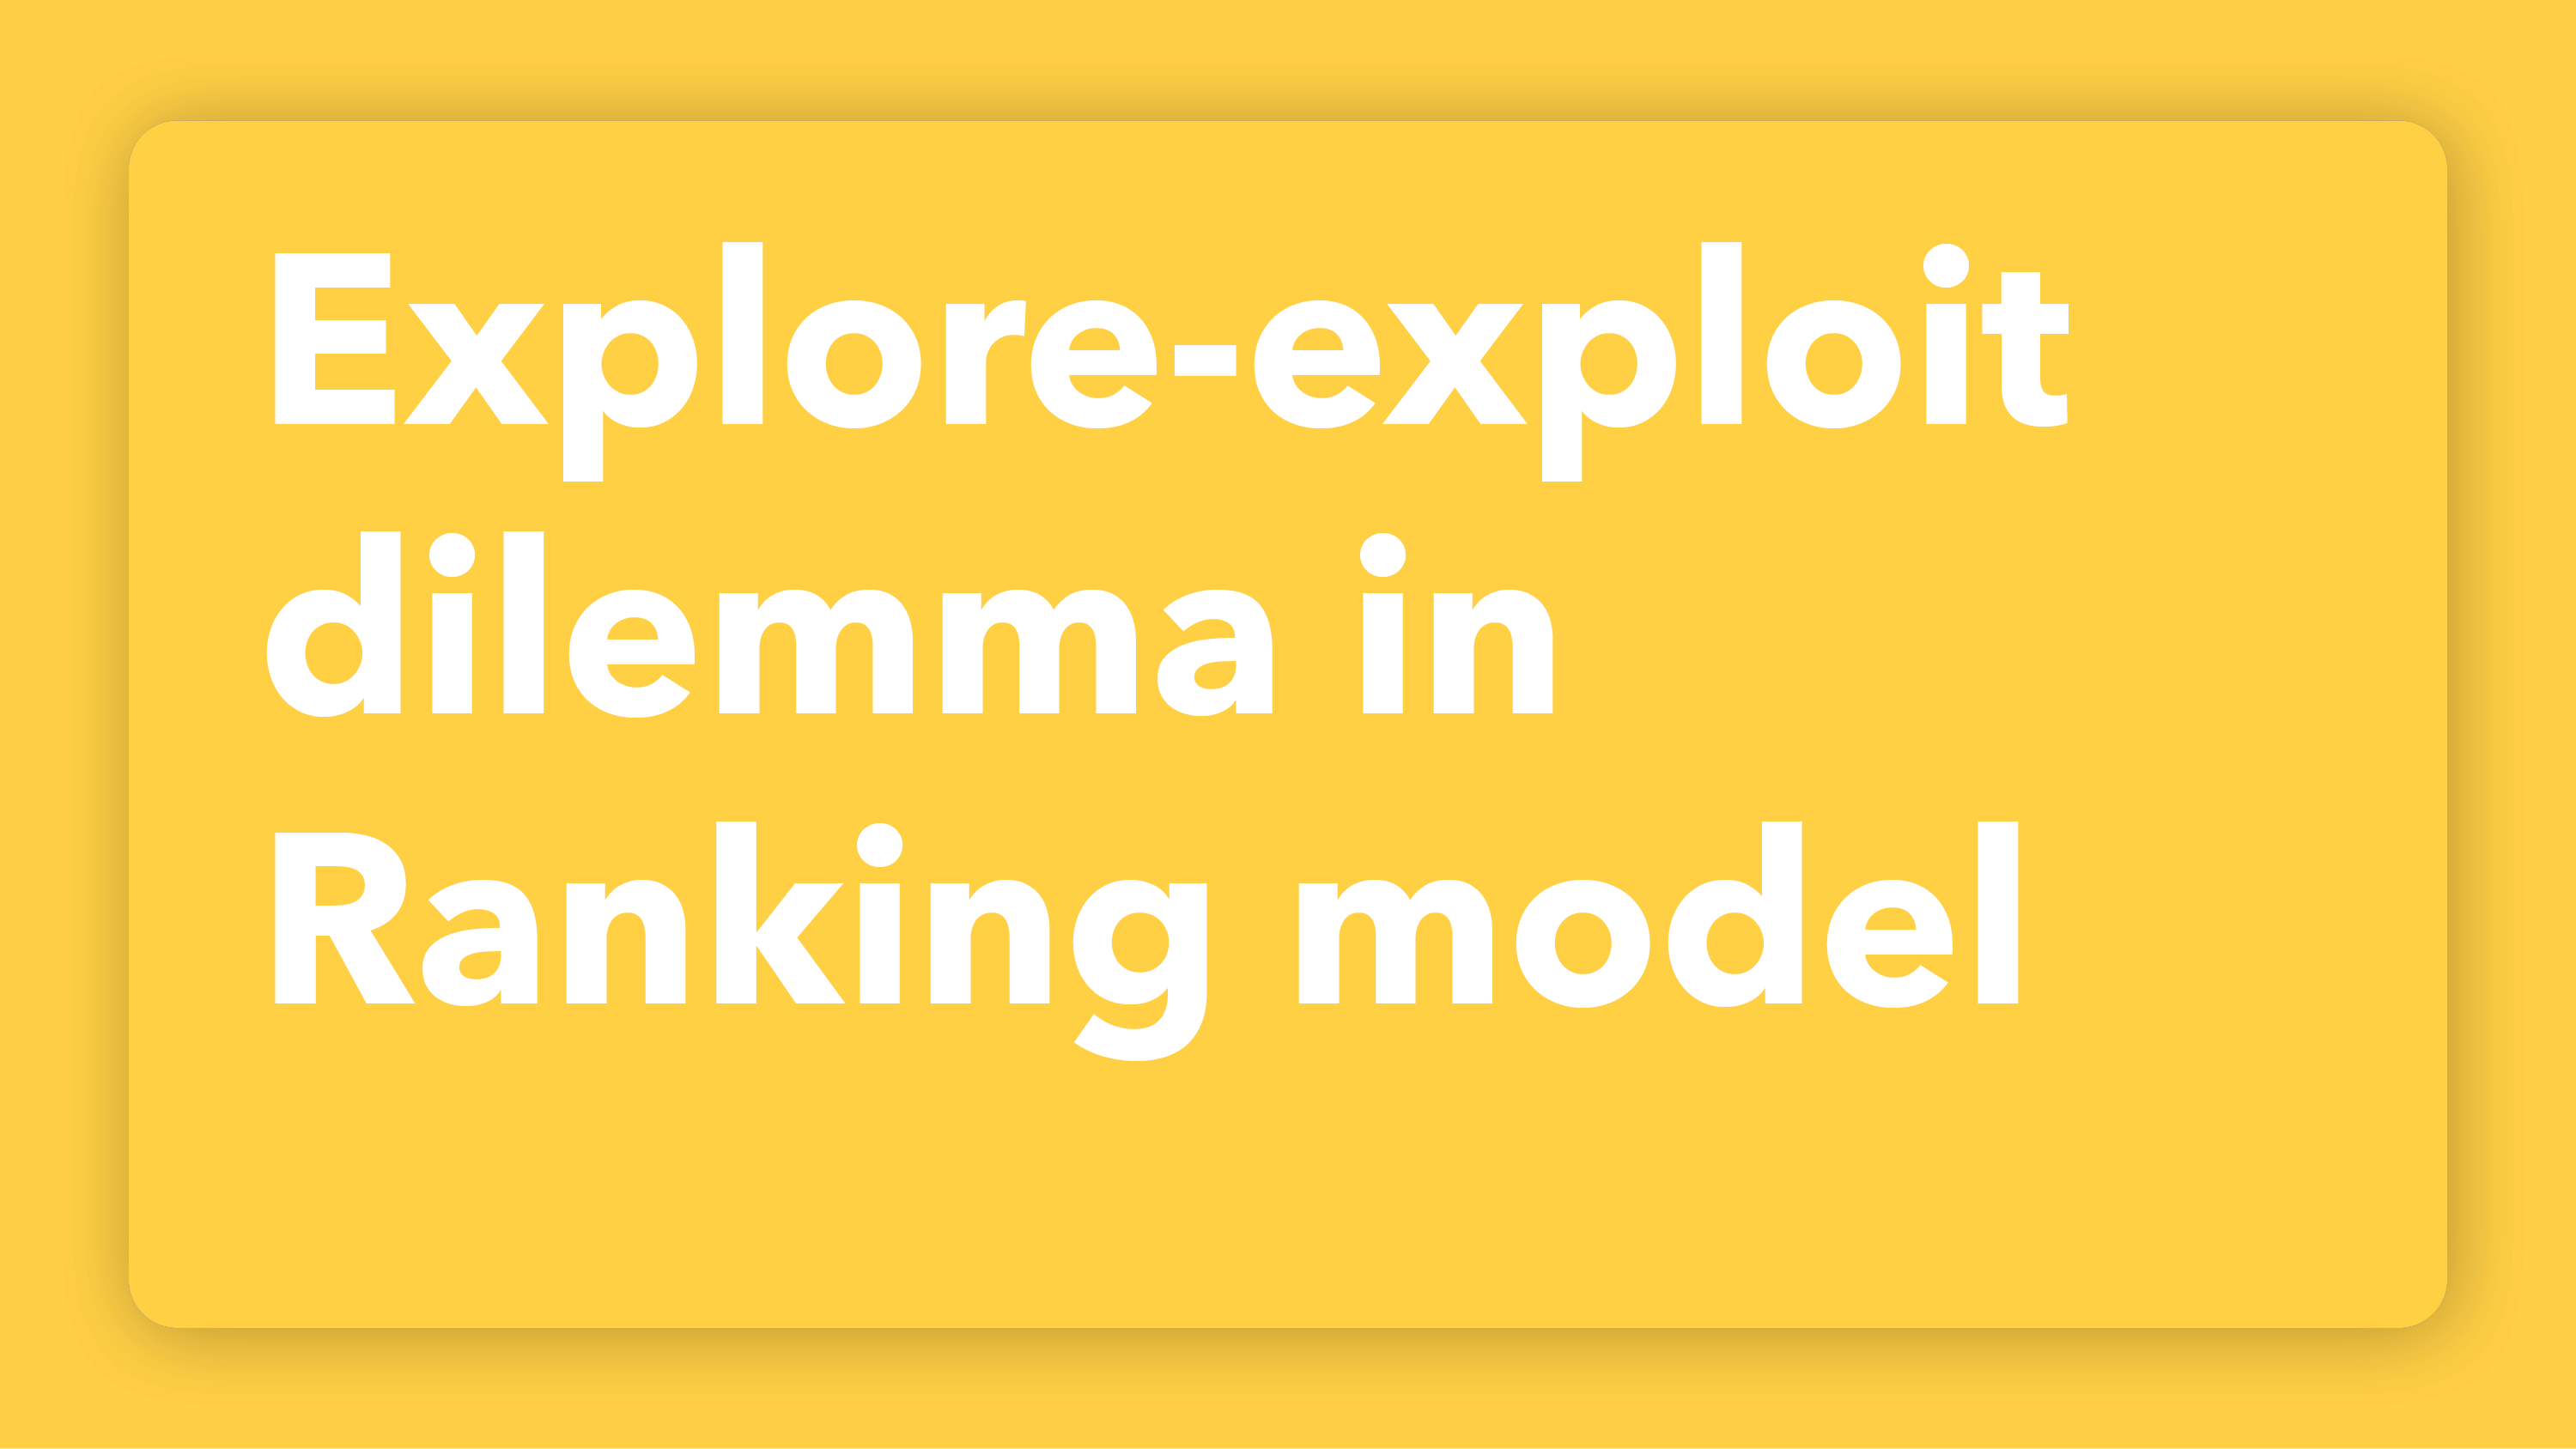 Explore-exploit dilemma in Ranking model